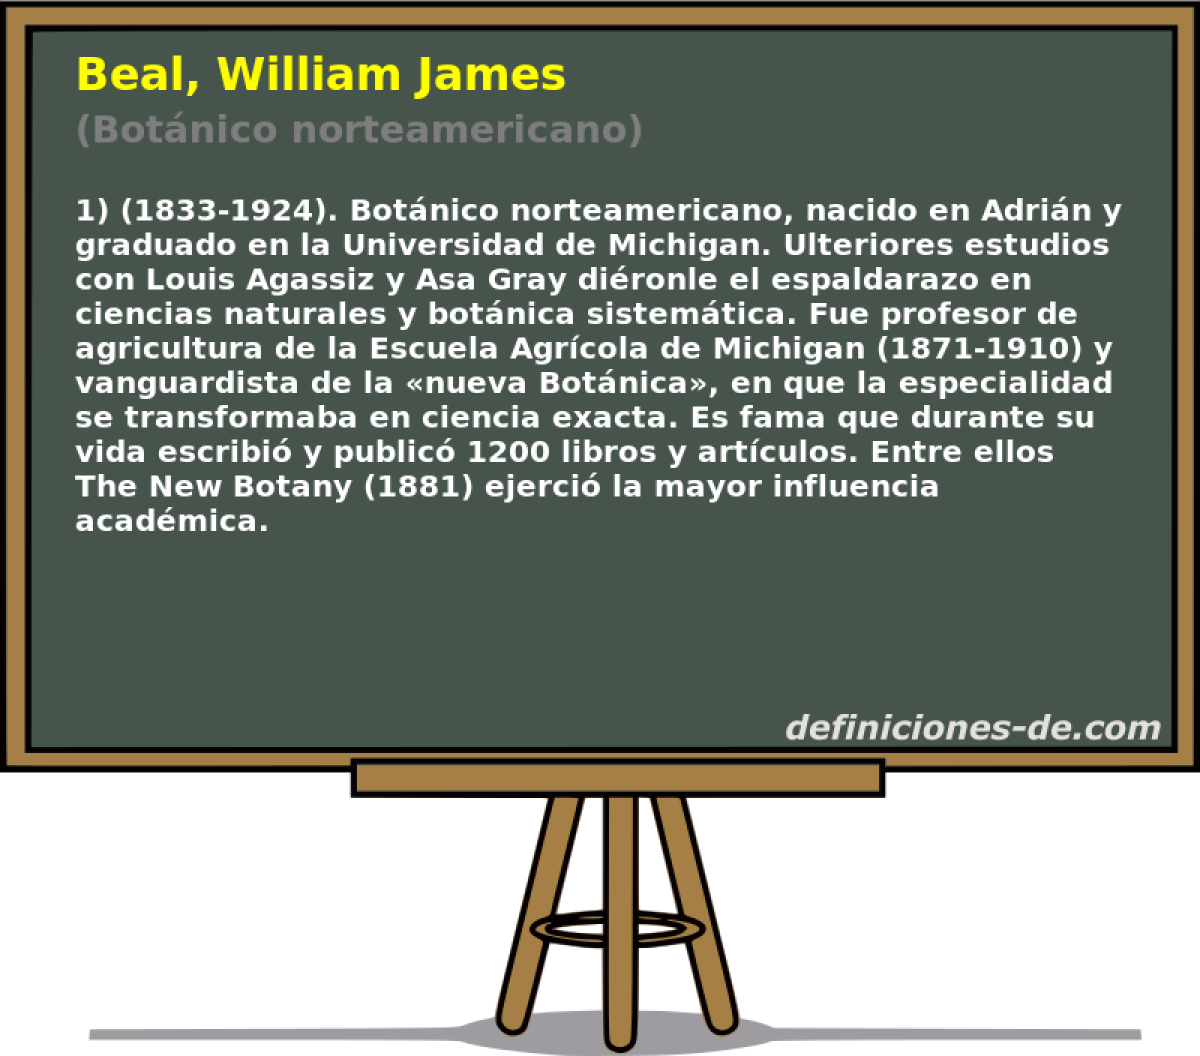 Beal, William James (Botnico norteamericano)